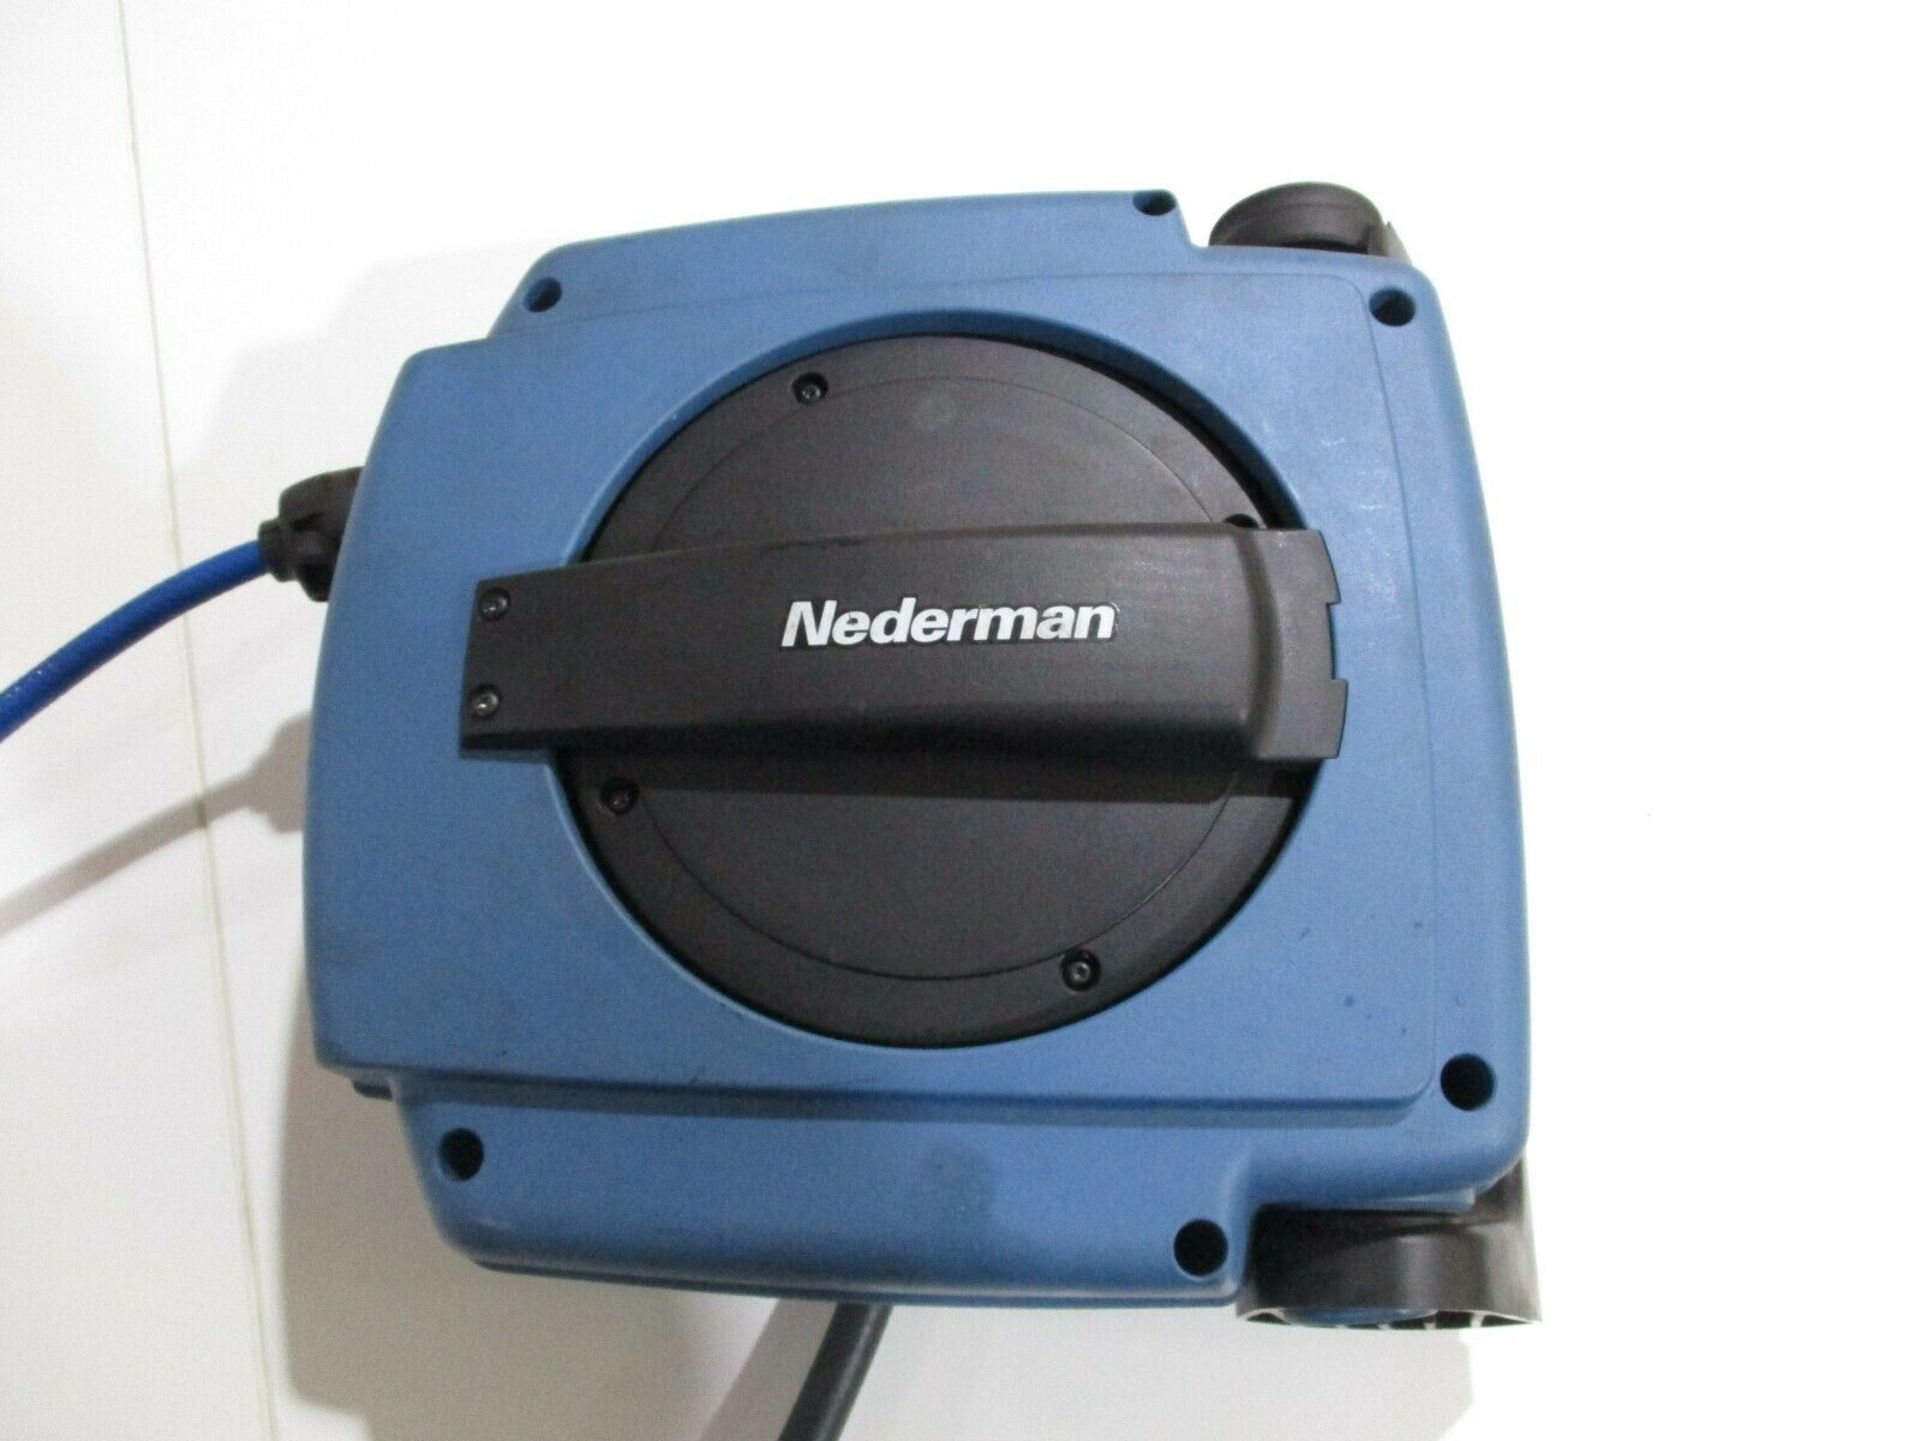 Nederman H20 Air Hose & Cable Reel - 8mm Hose, 8m Long